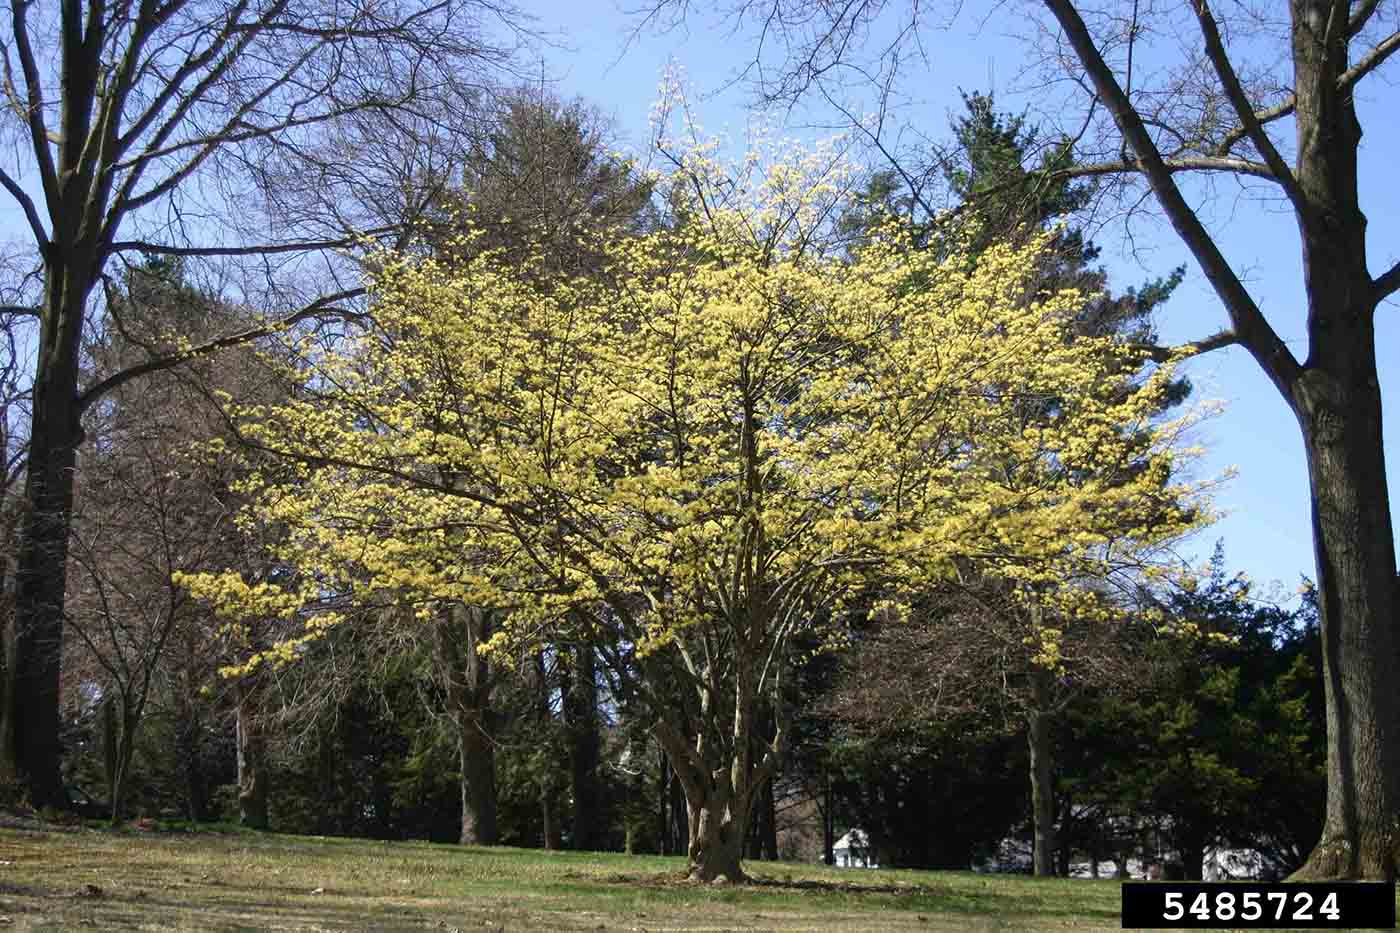 Cornelian cherry dogwood tree in bloom